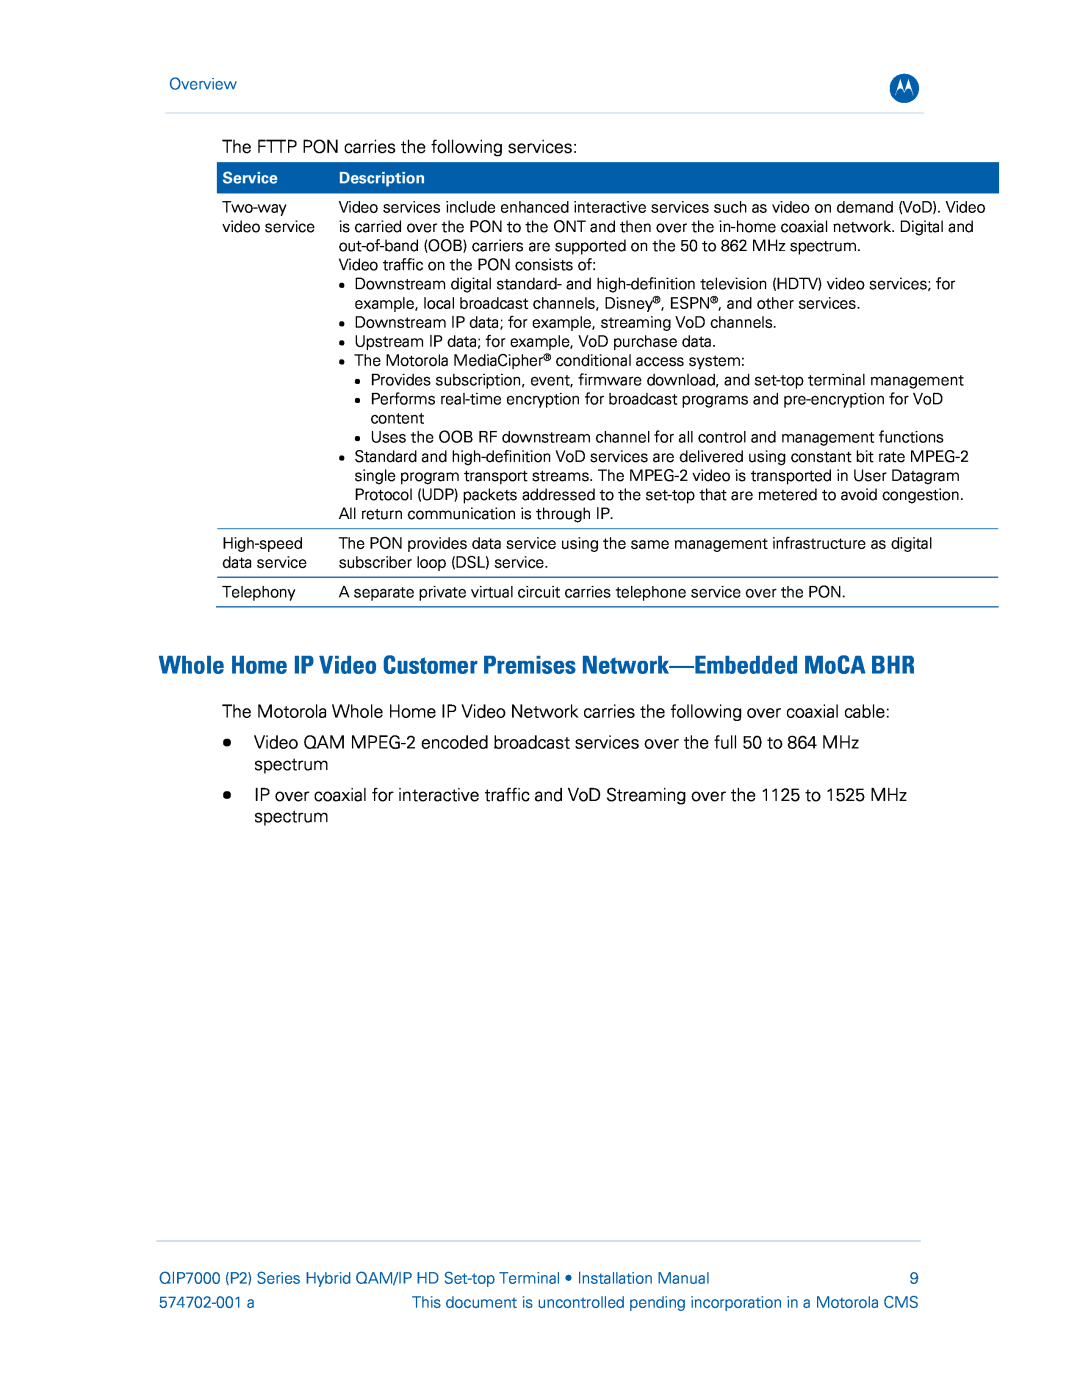 Motorola QIP7000 installation manual Whole Home IP Video Customer Premises Network-Embedded MoCA BHR 